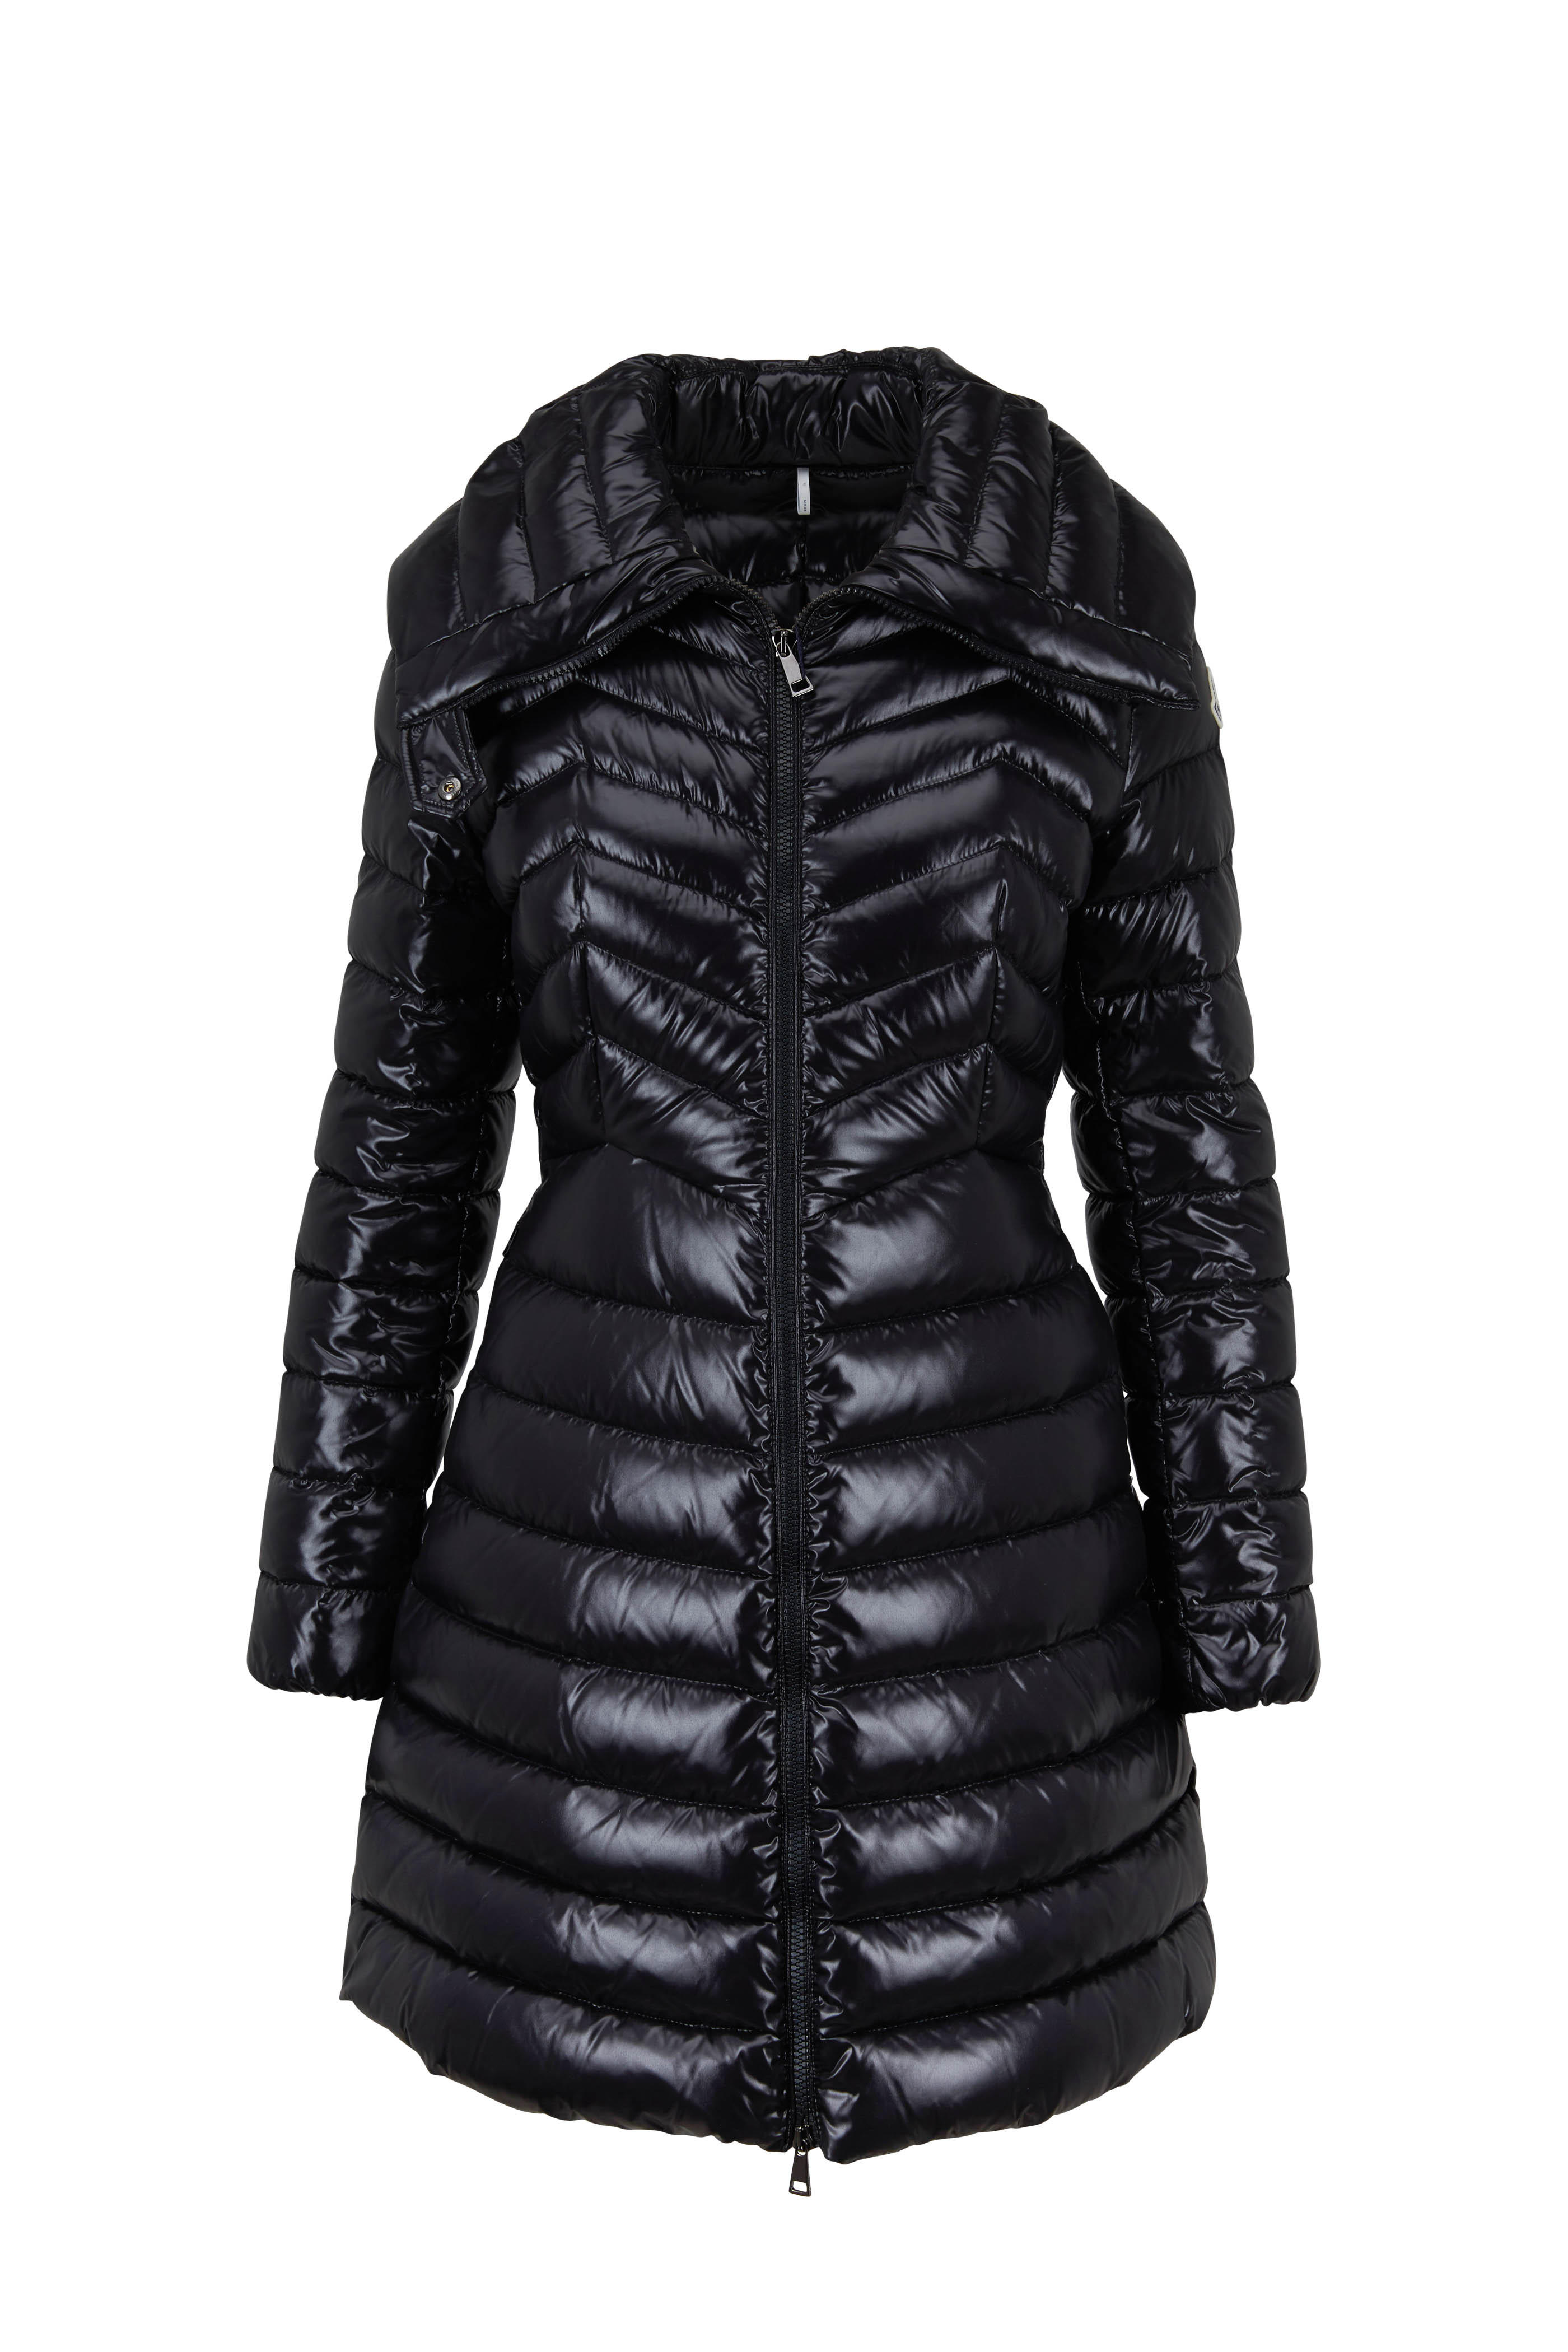 black shiny moncler coat